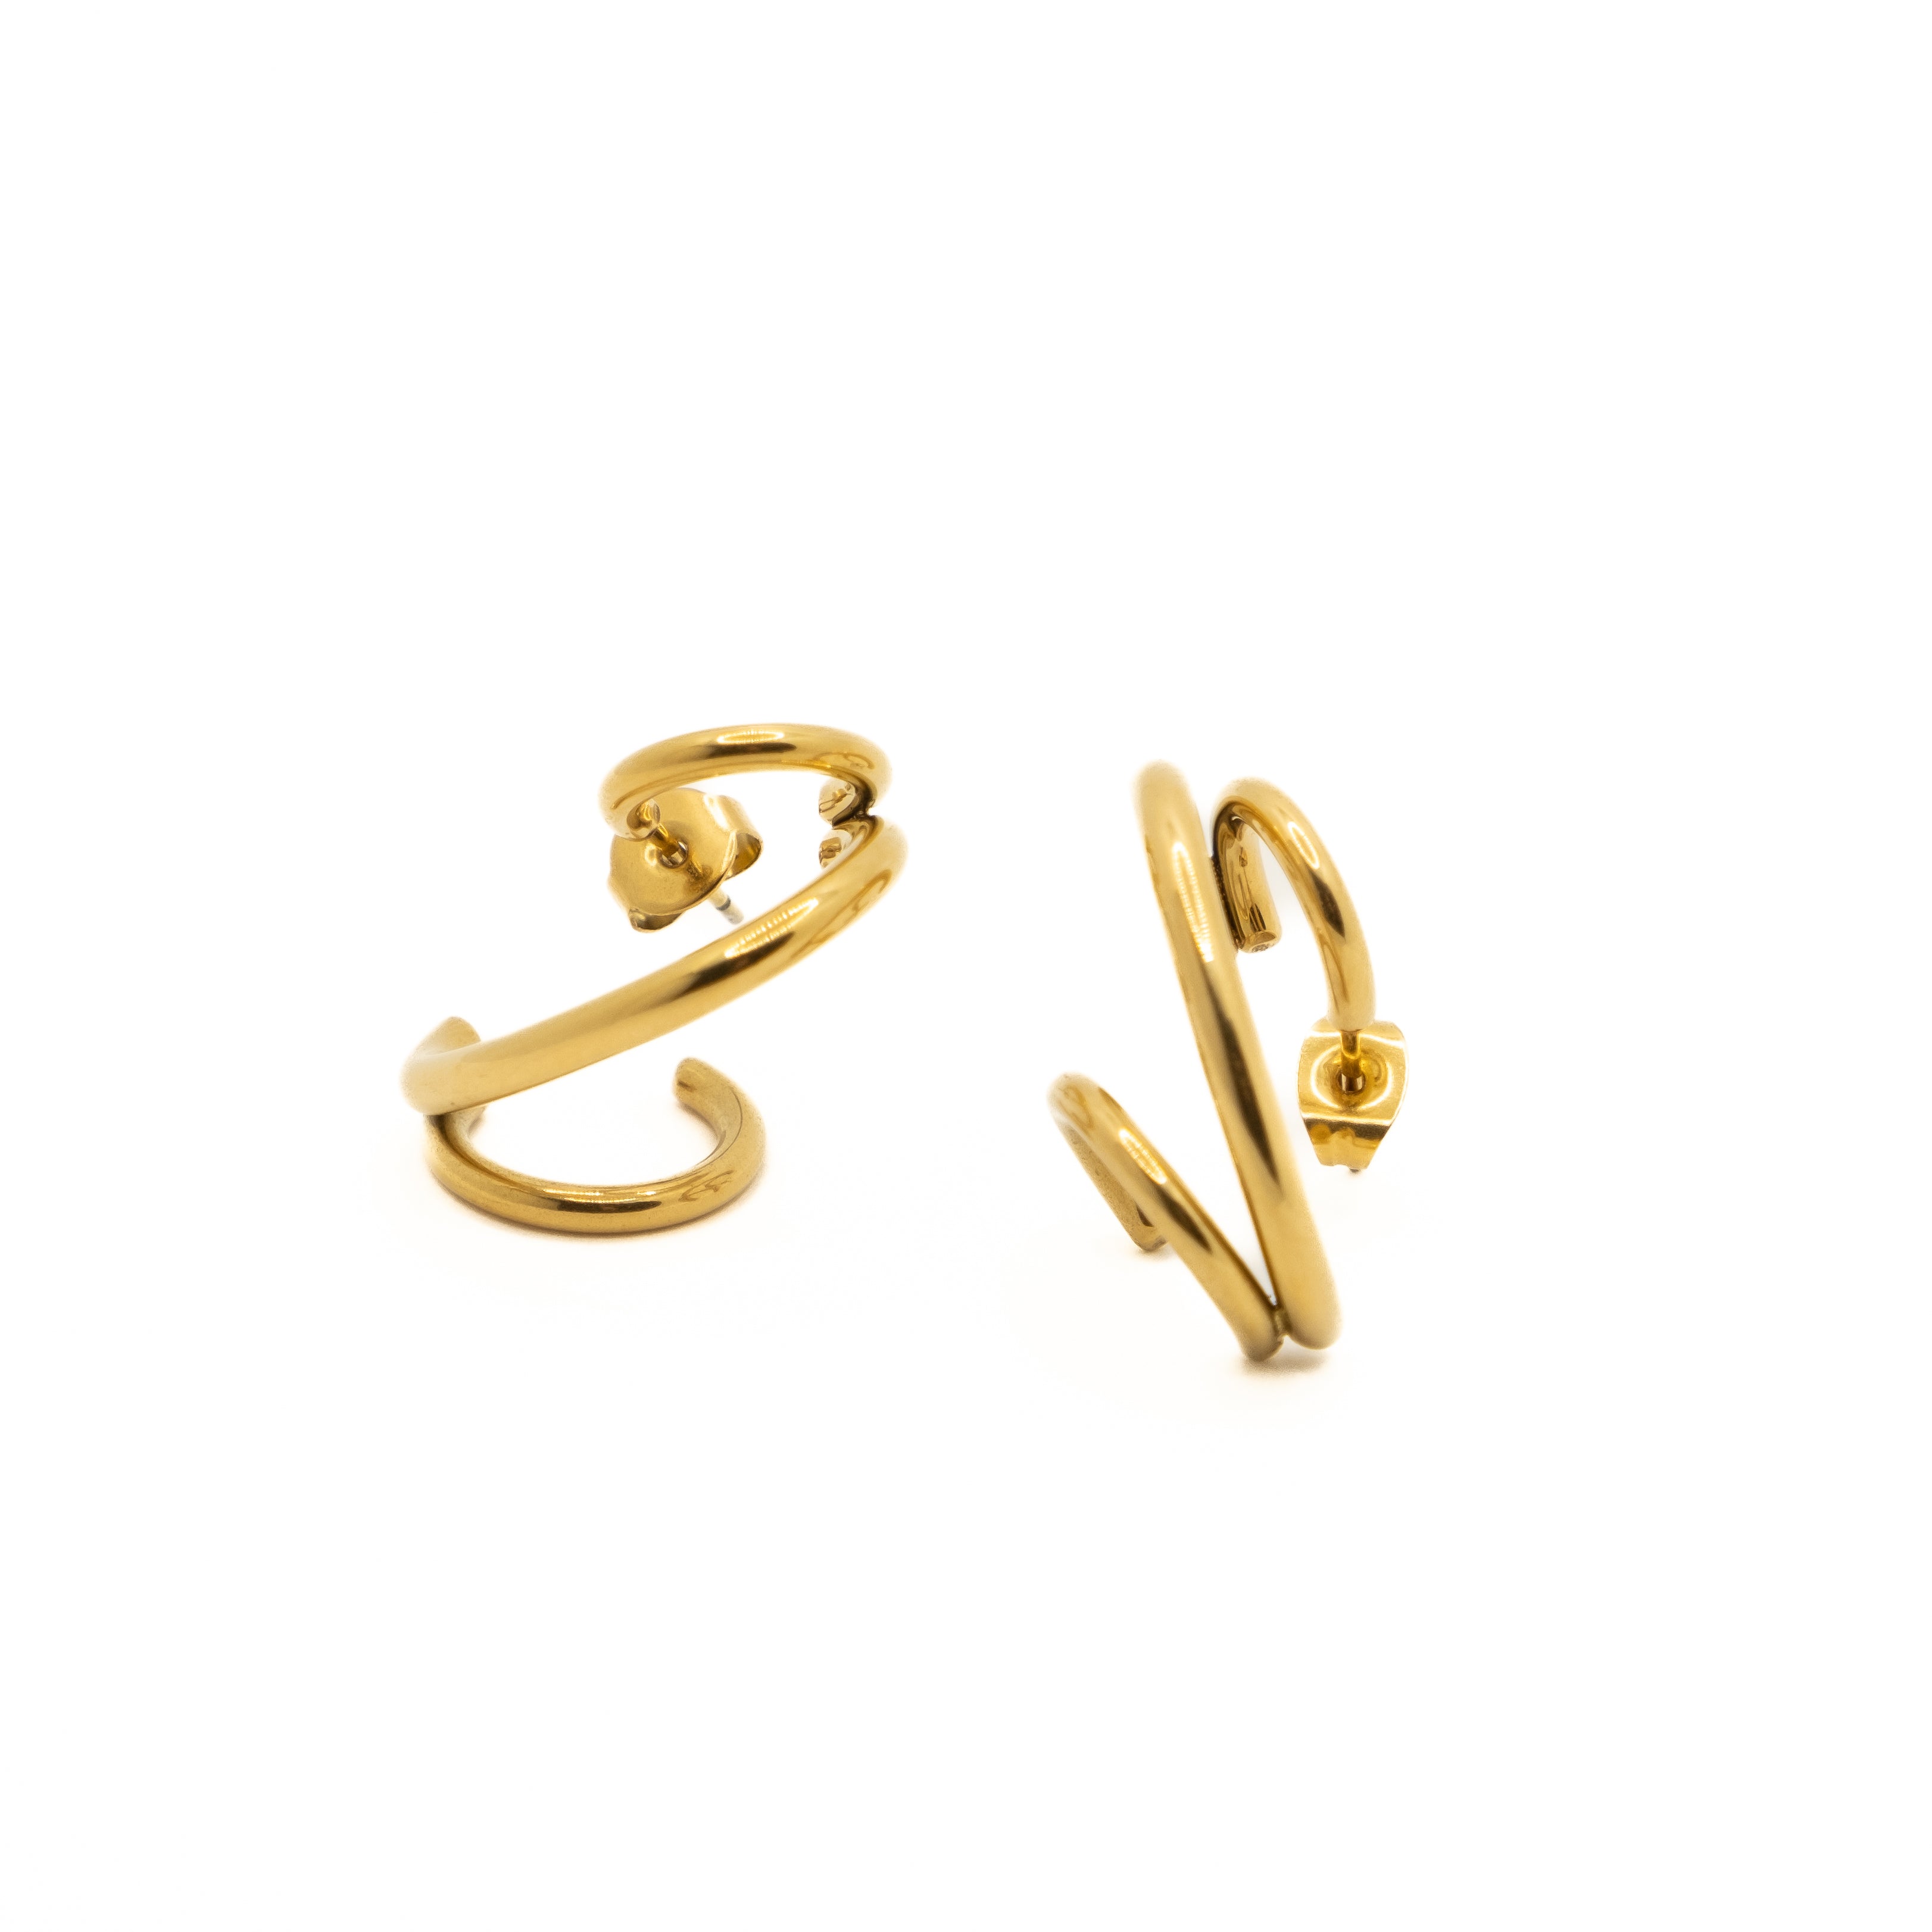 "Golden Ratio" Earrings